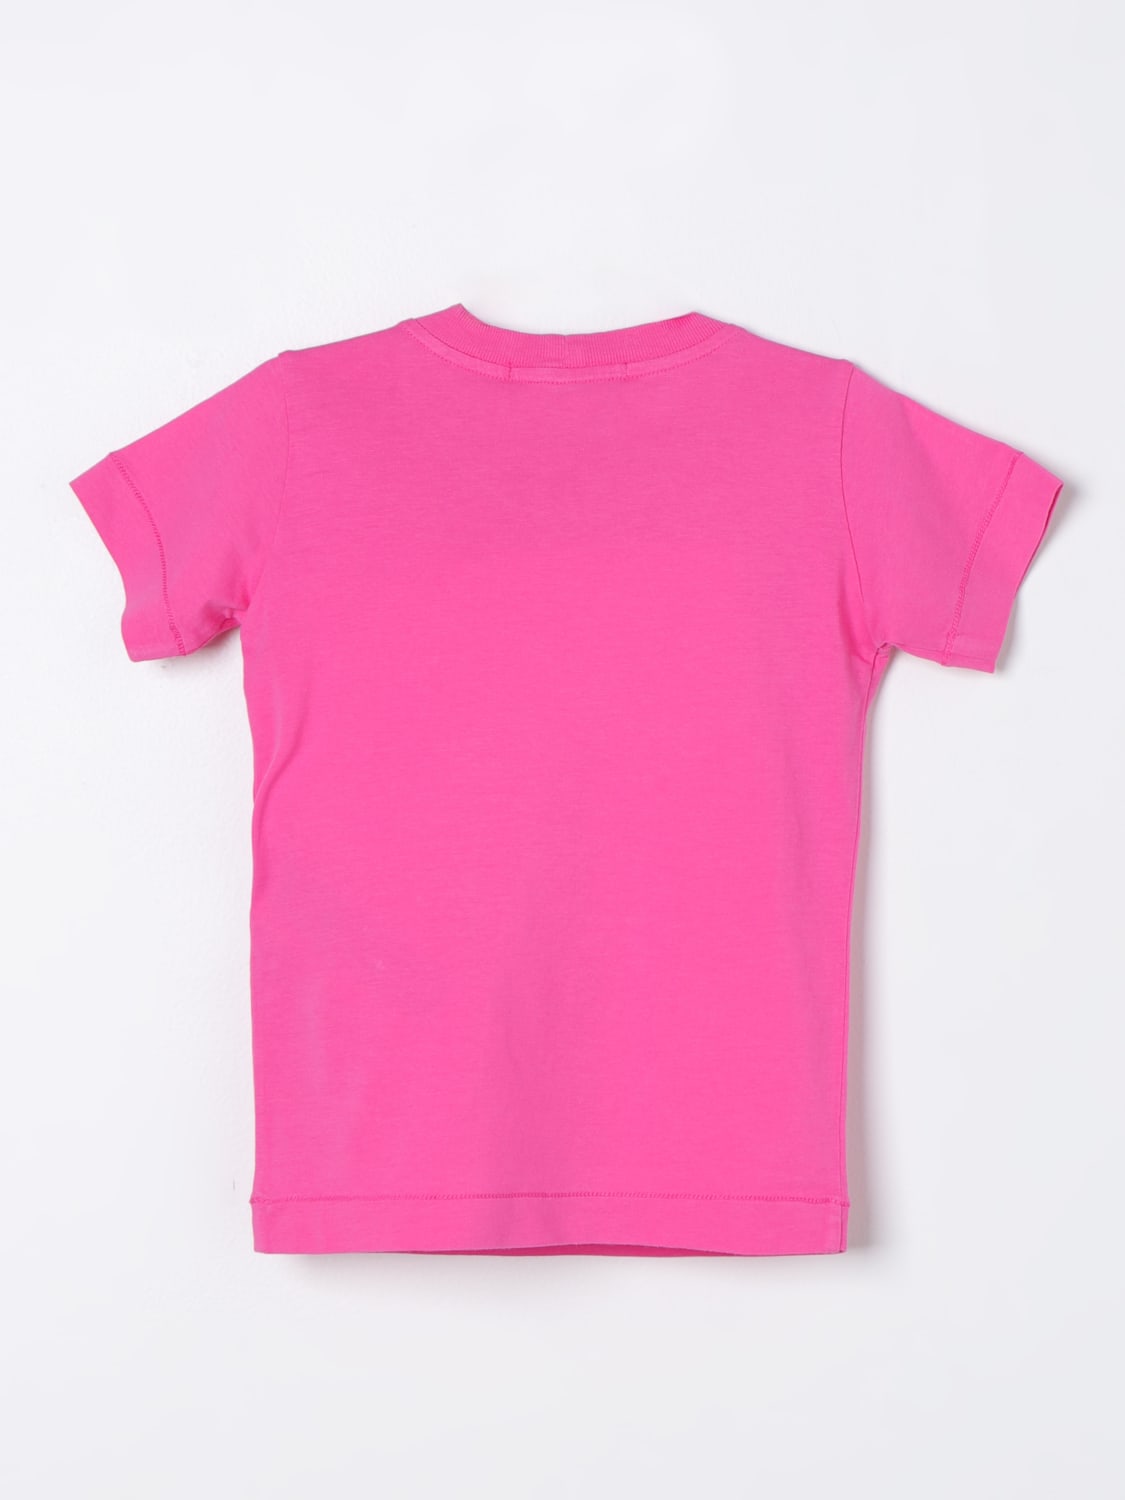 STONE ISLAND JUNIOR: t-shirt for boys - Fuchsia | Stone Island Junior t- shirt 20147 online at